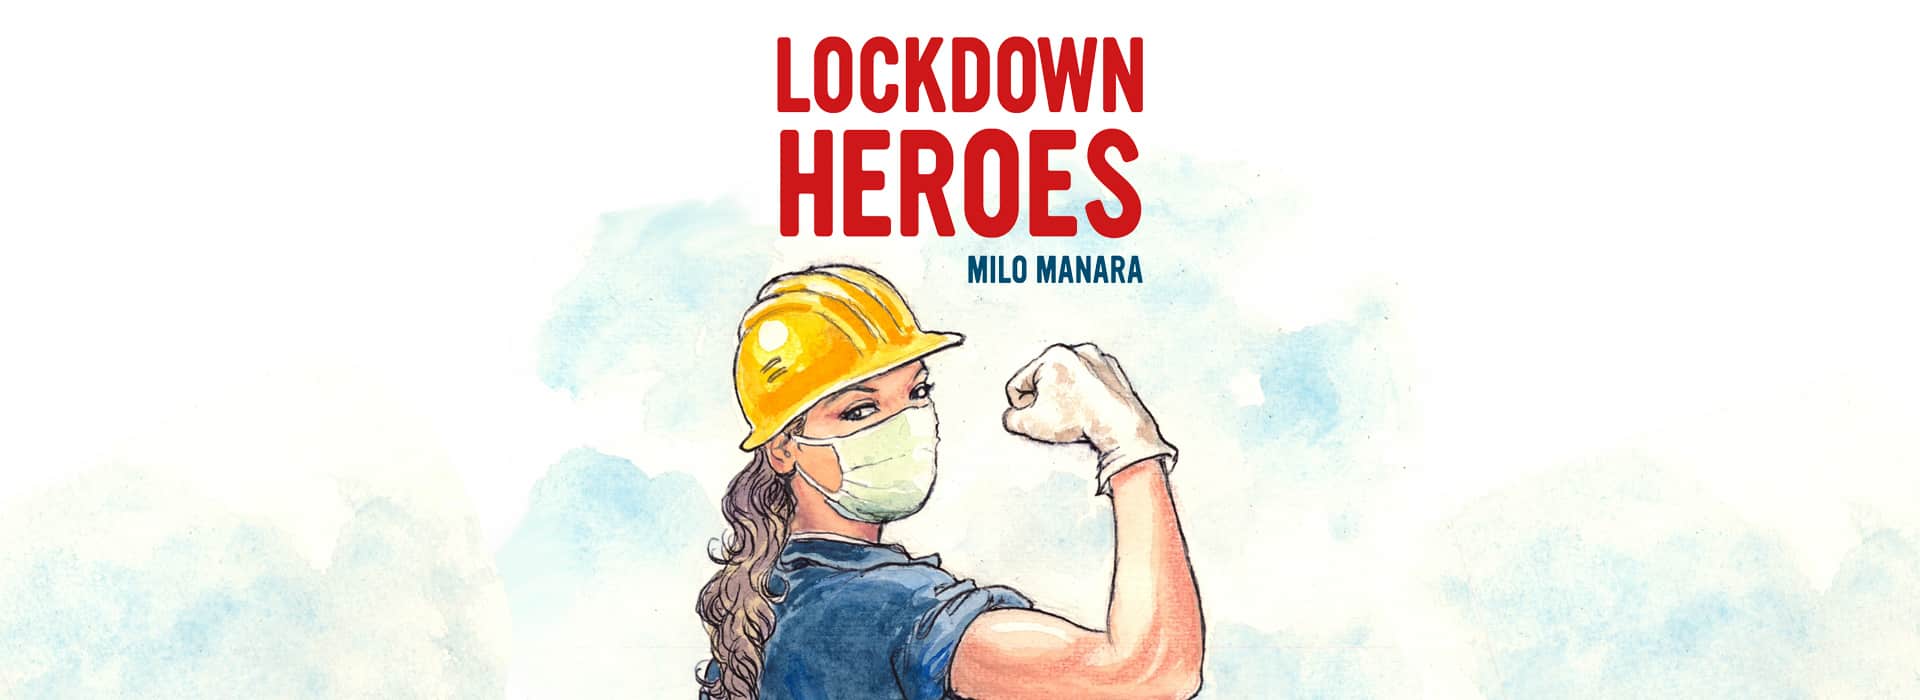 Lockdown Heroes, il portfolio di Milo Manara thumbnail